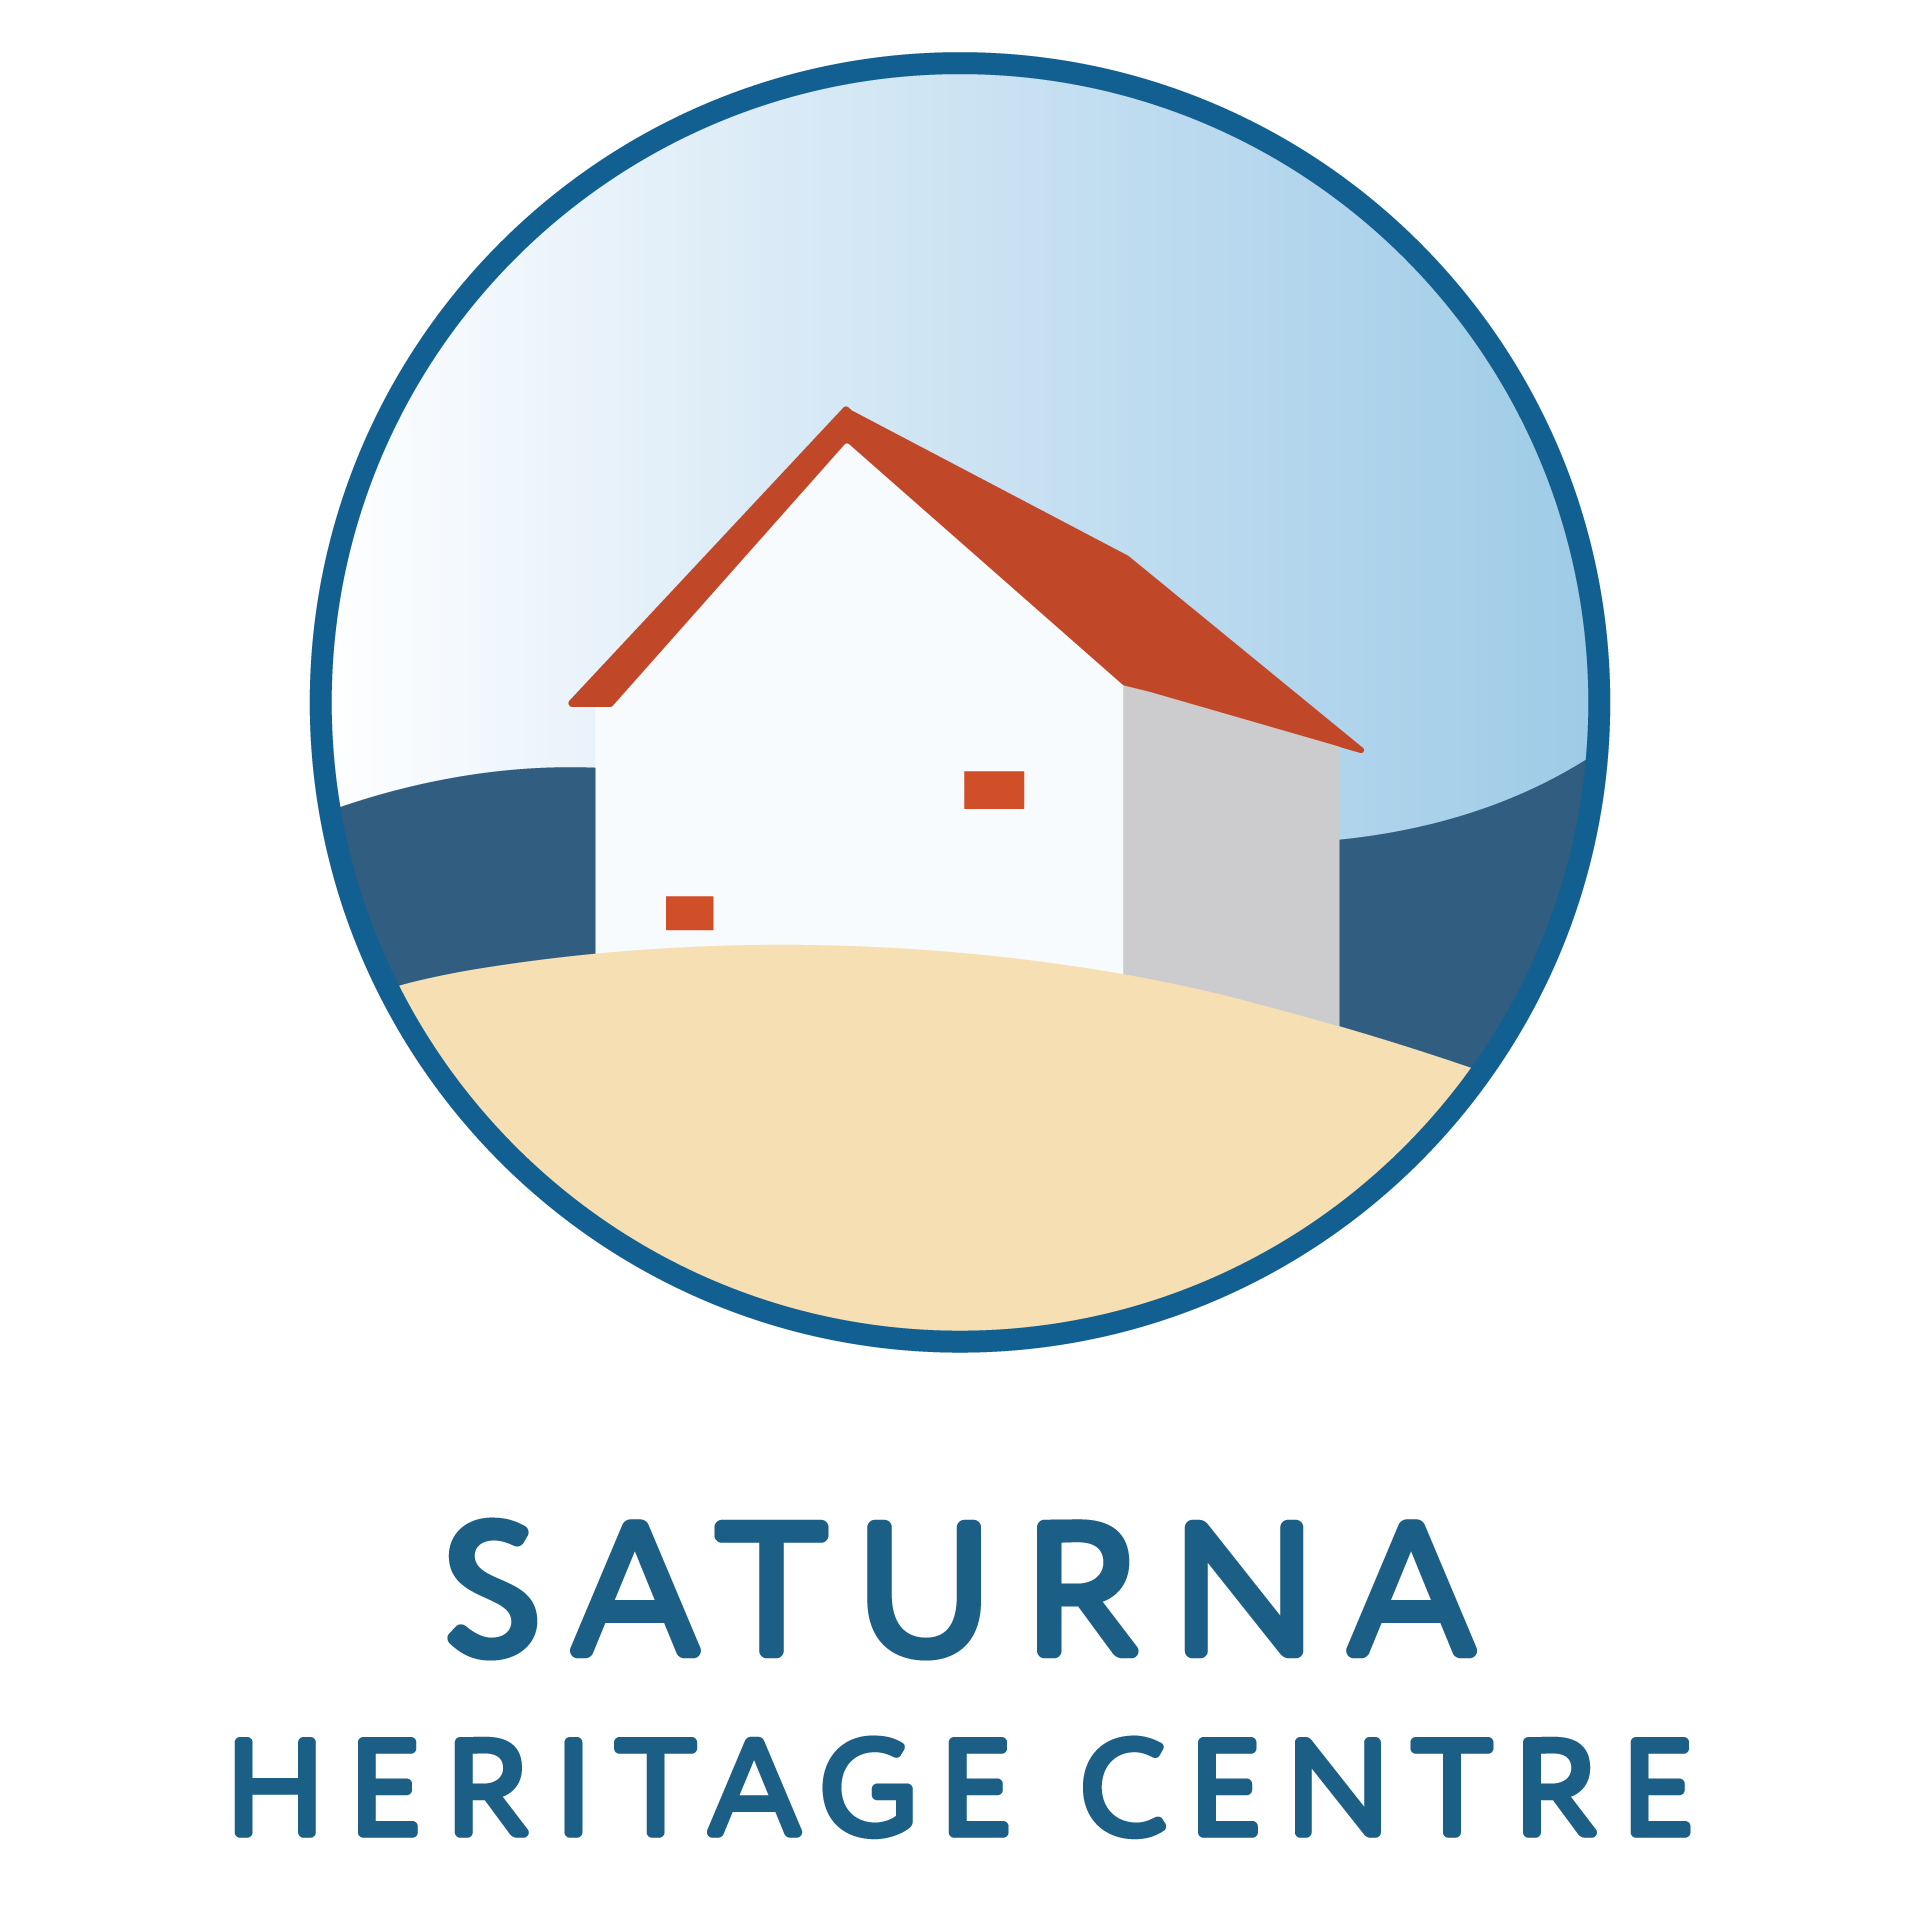 Saturna Heritage Centre